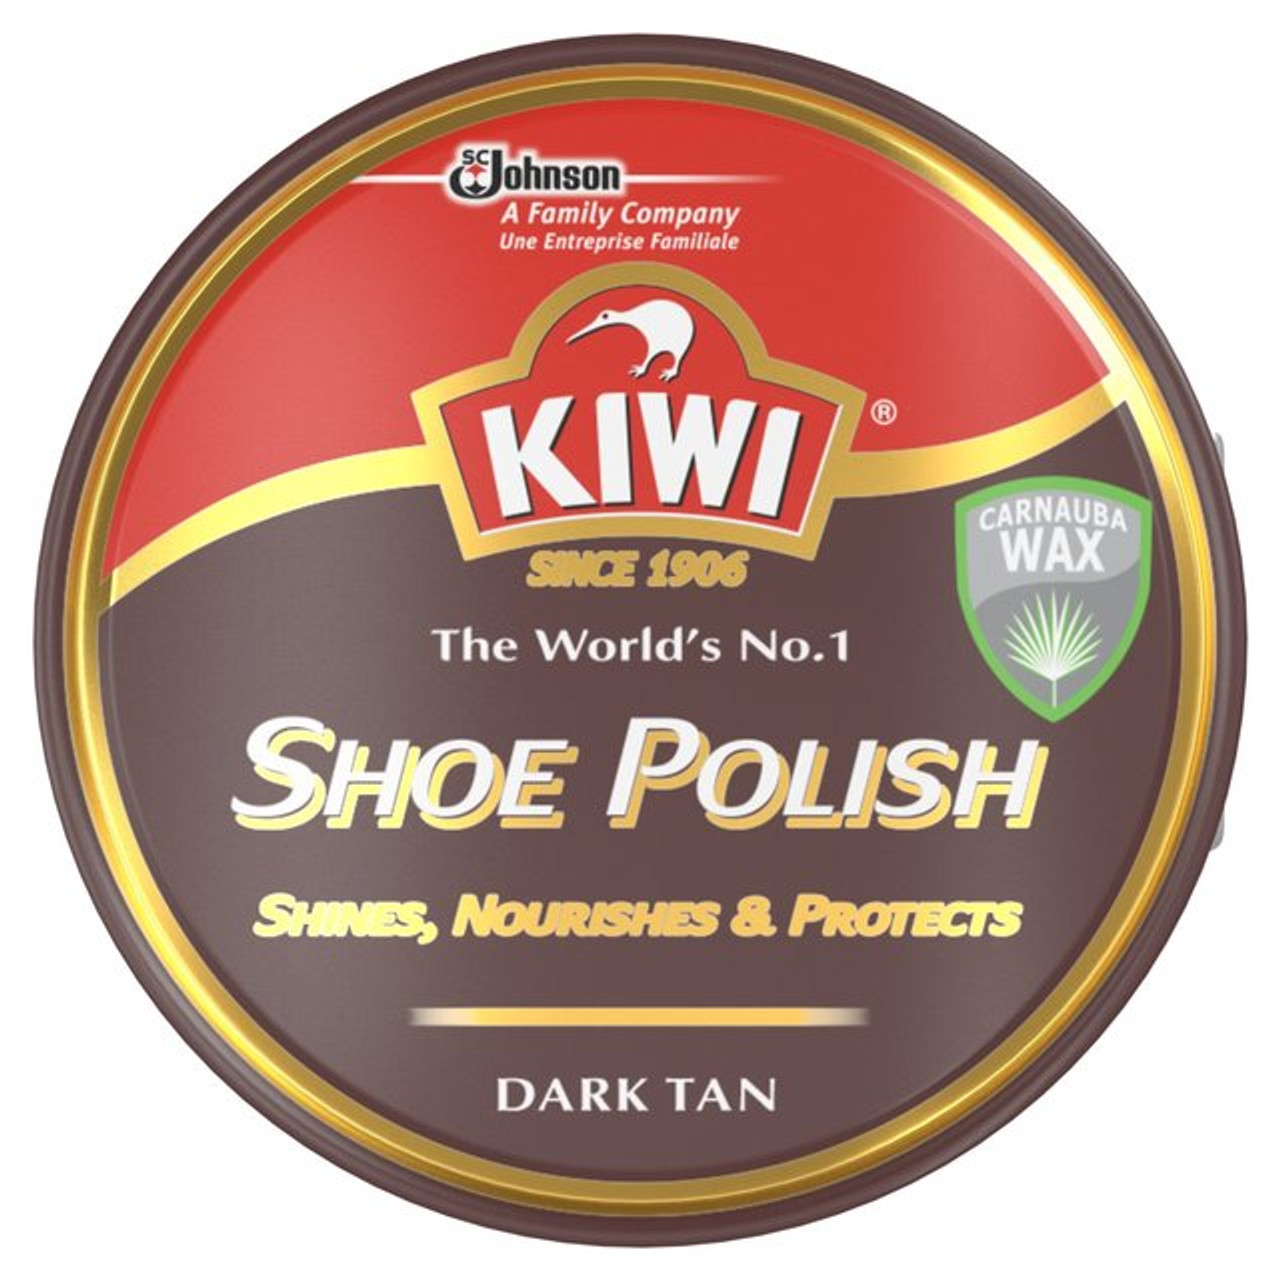 kiwi shoe polish asda